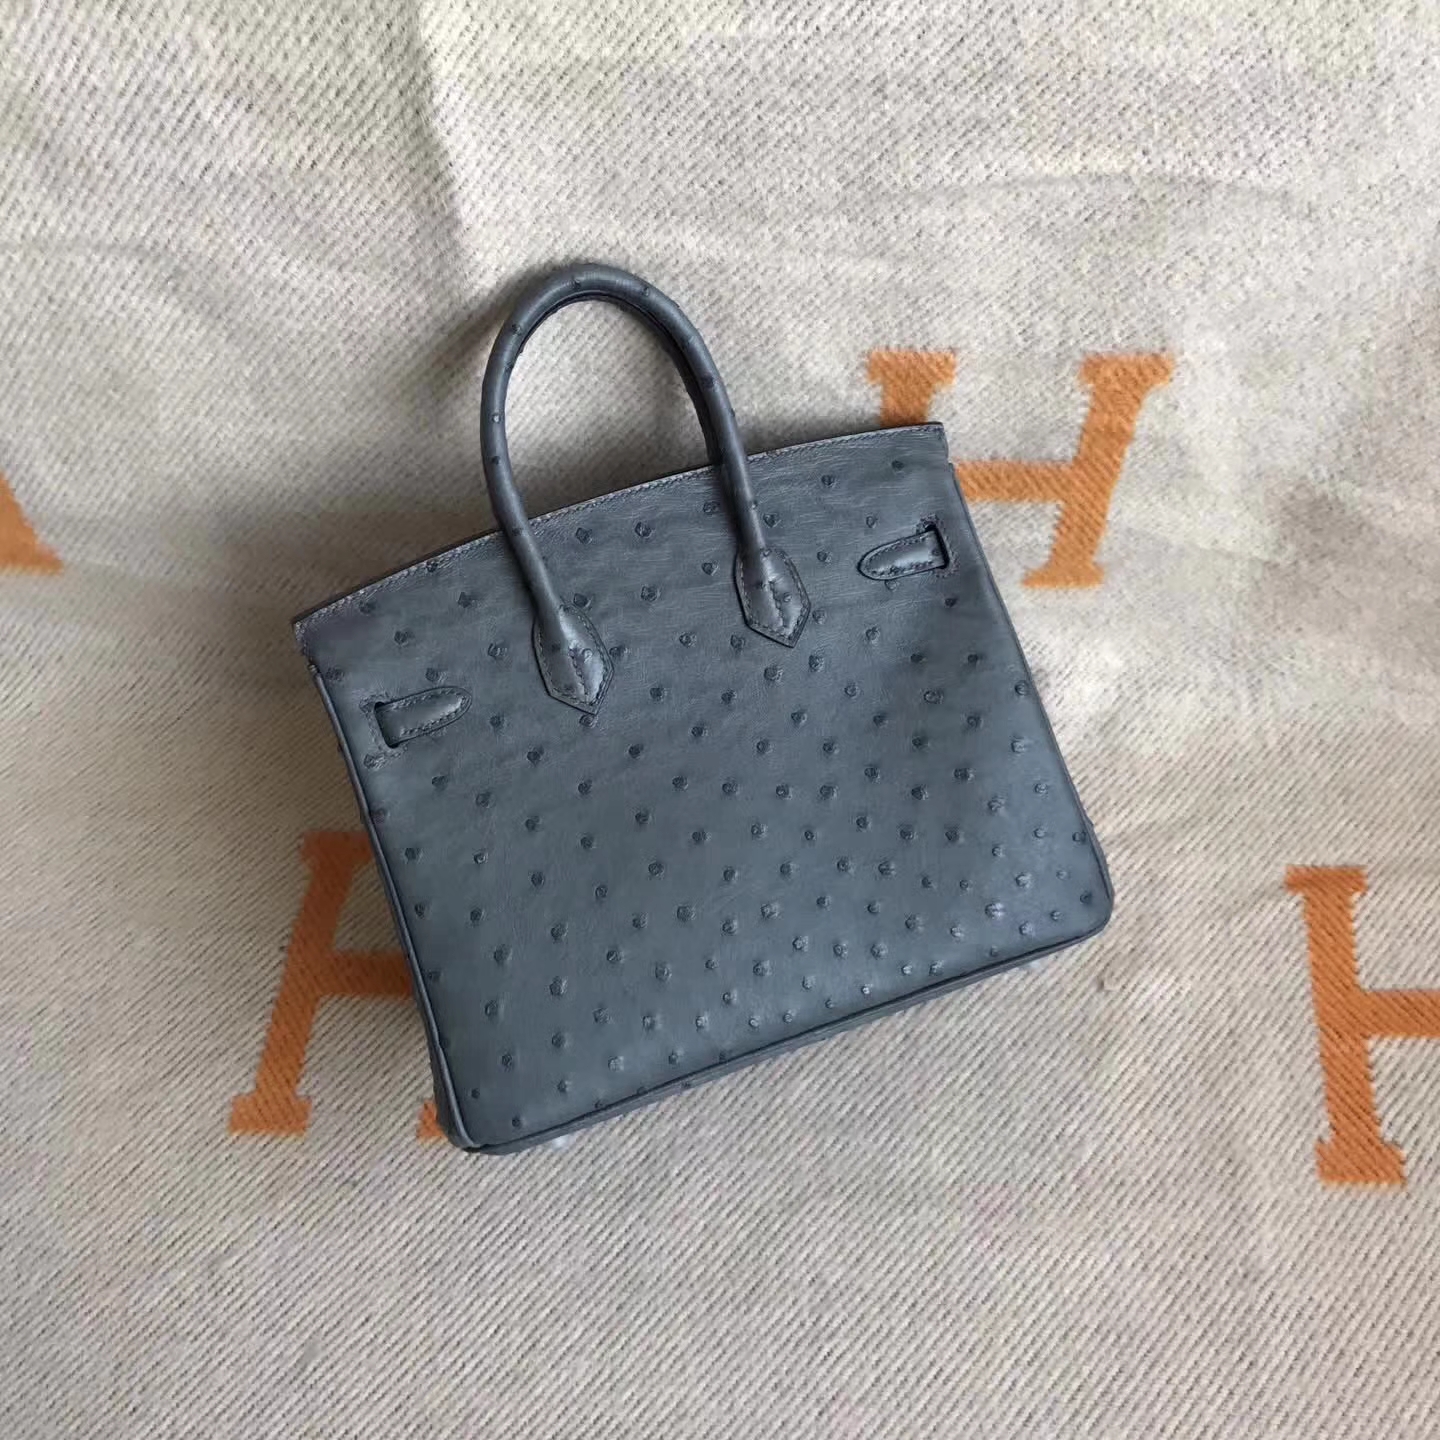 Wholesale Hermes Ostrich Leather Birkin25cm Tote Bag in 8F Etain Grey